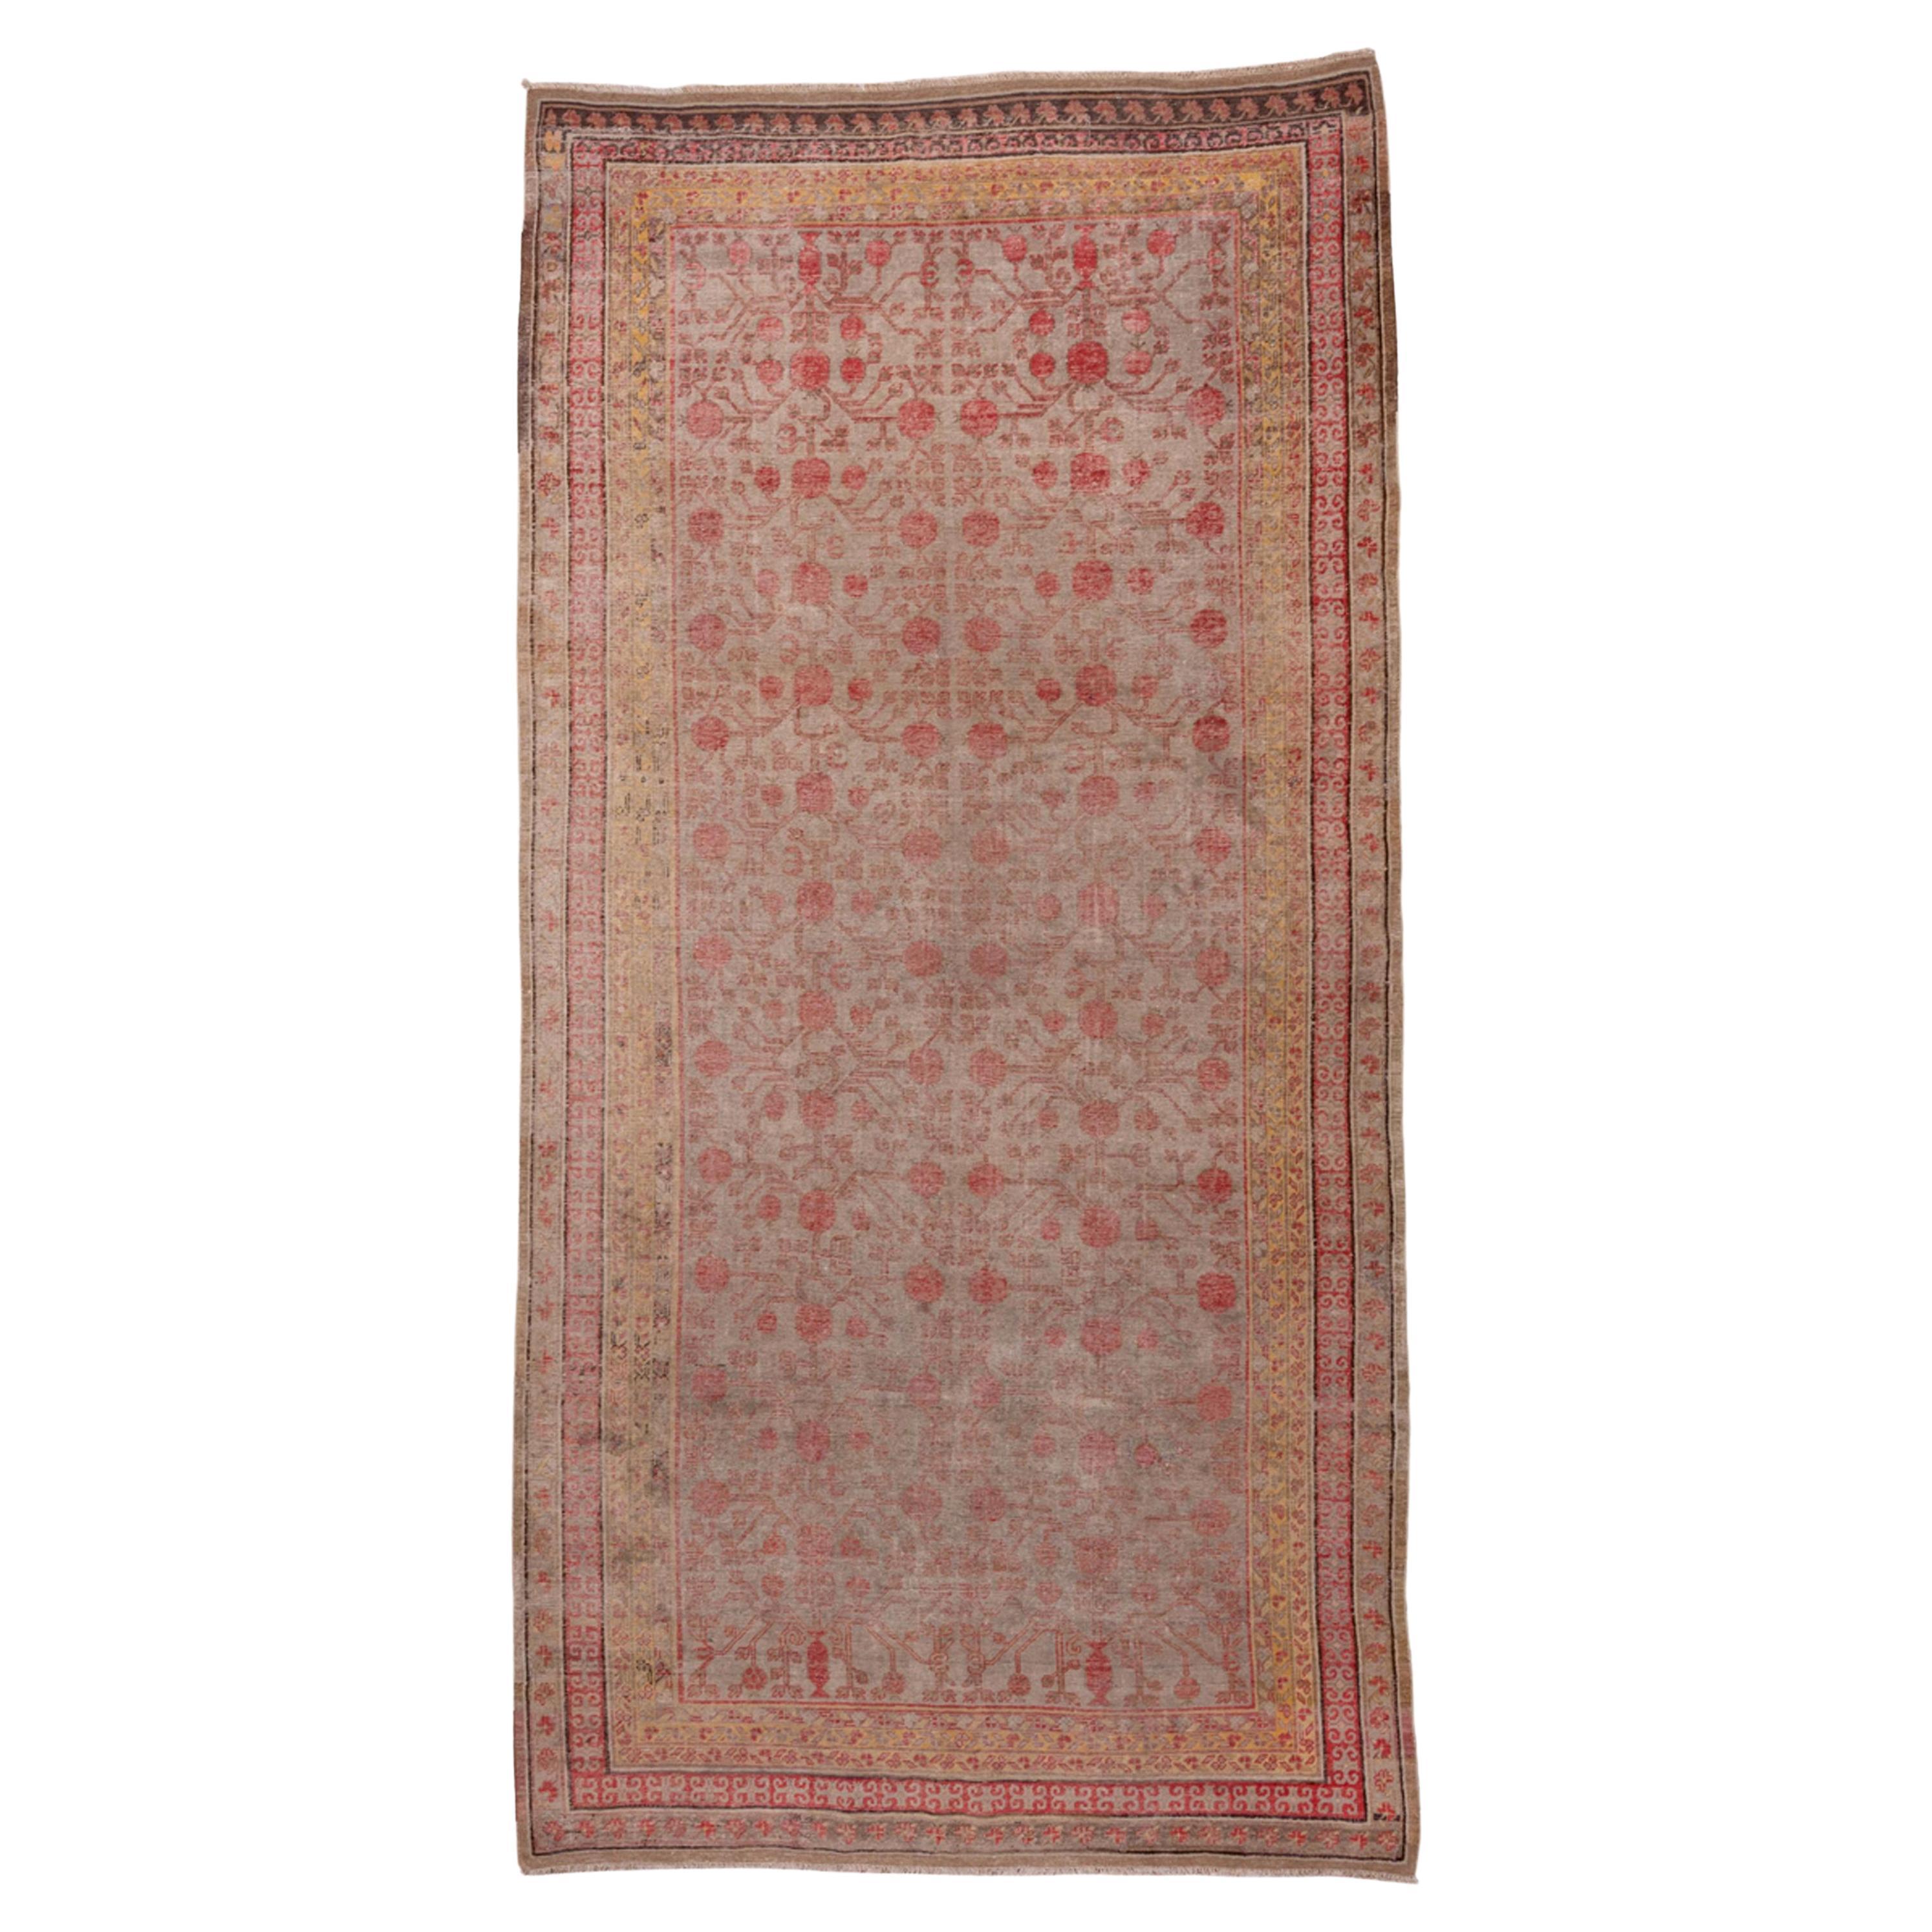 Antique Khotan Carpet, circa 1910s